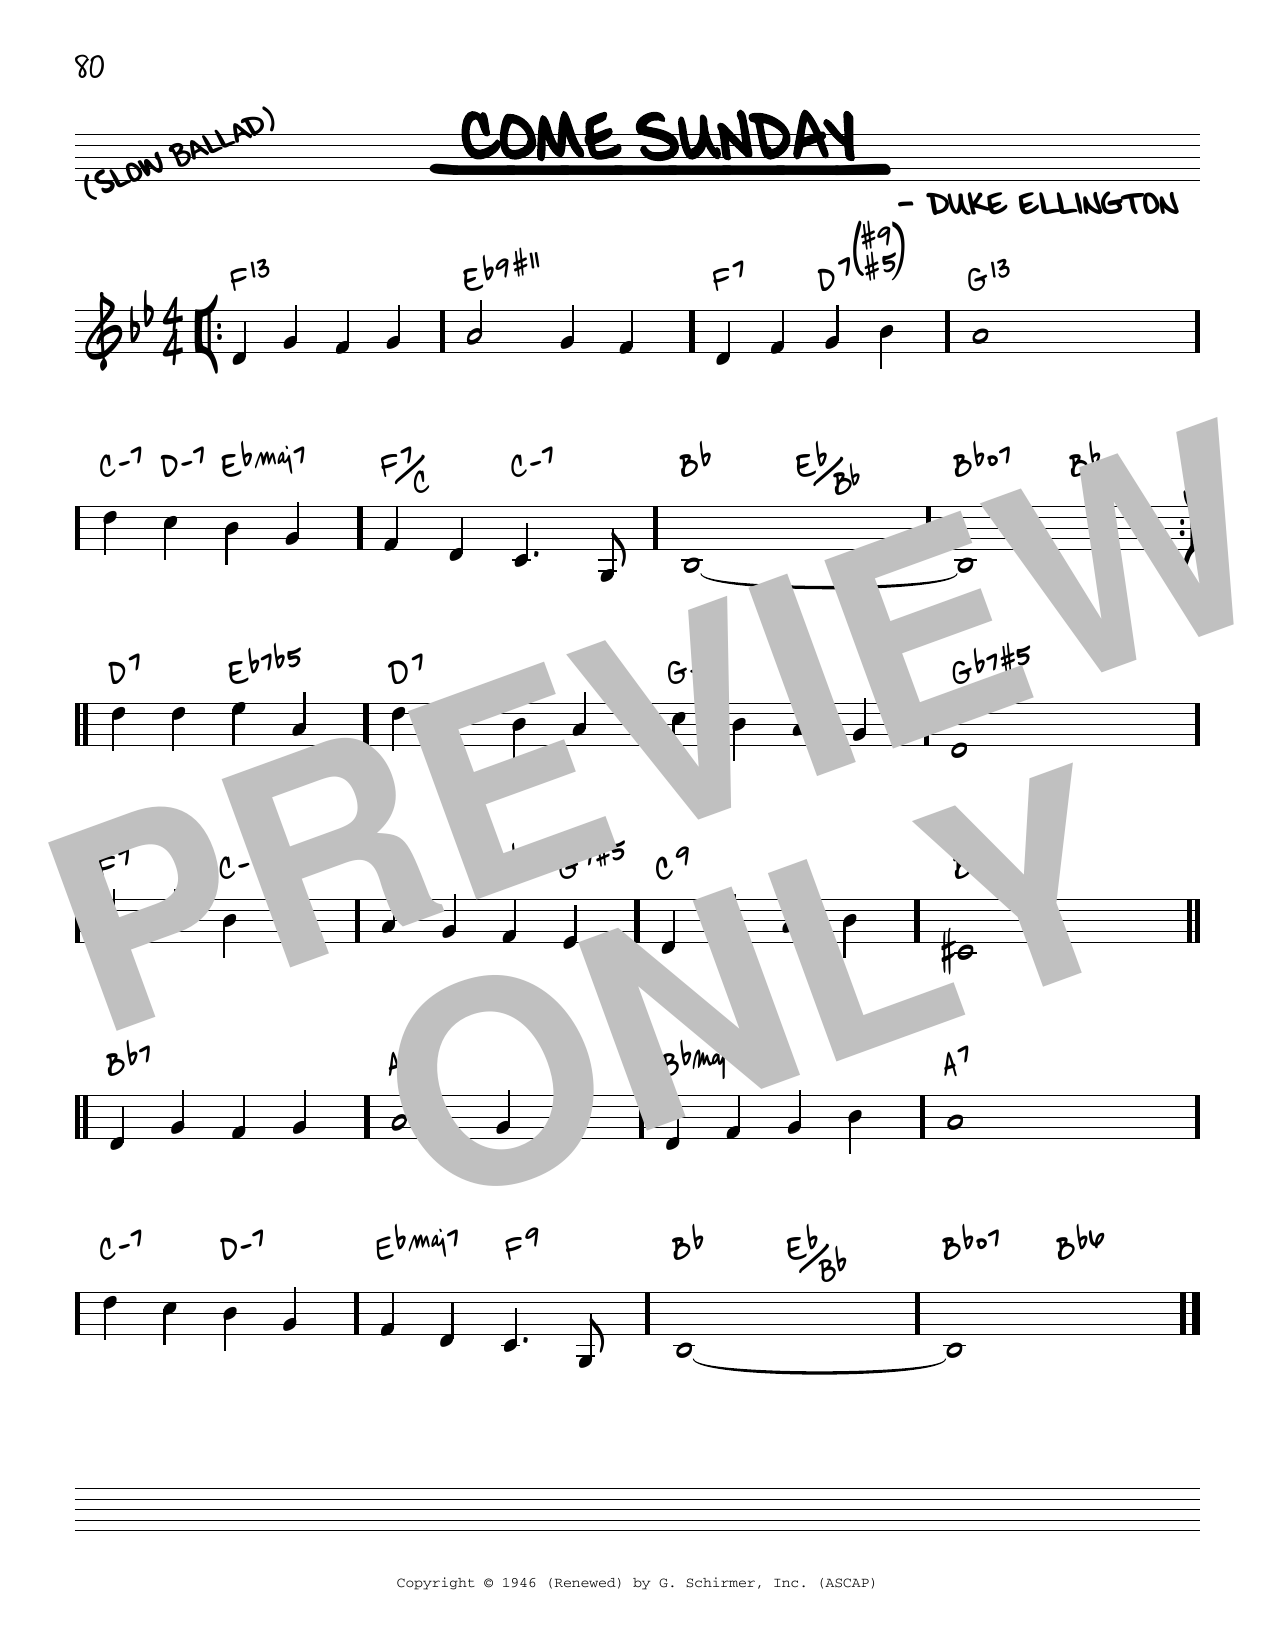 Download Duke Ellington Come Sunday [Reharmonized version] (arr Sheet Music